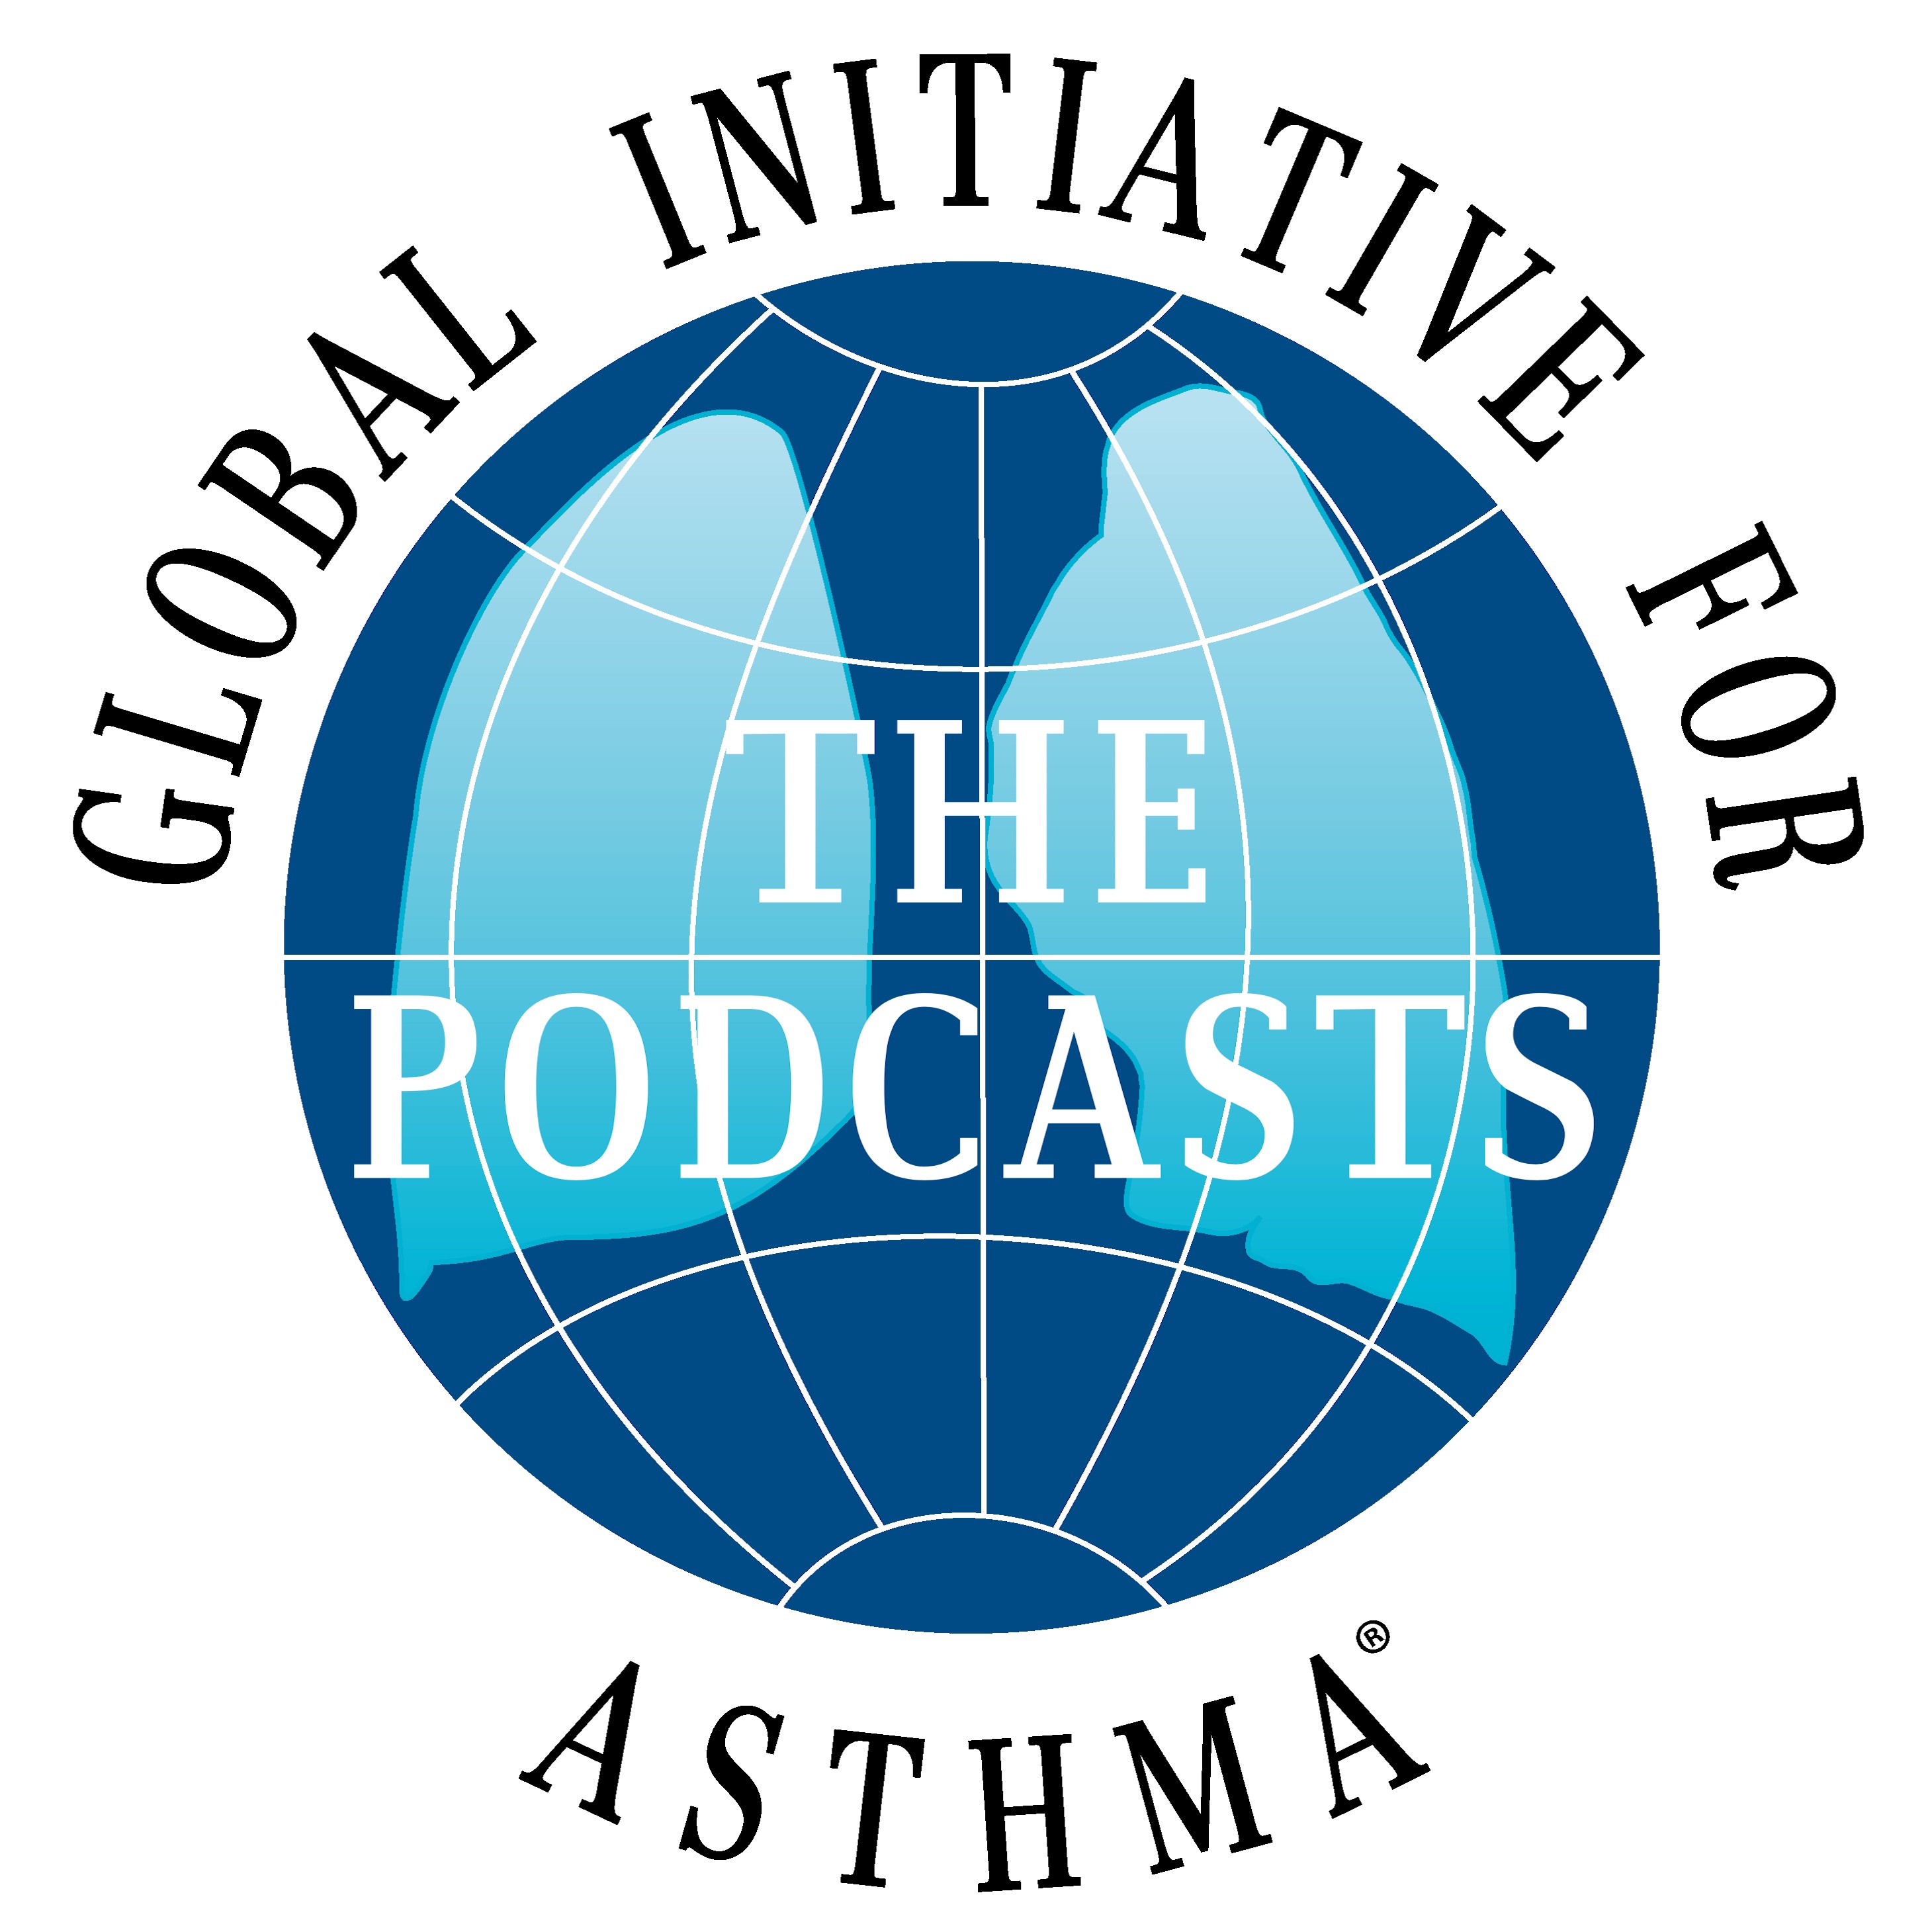 GLOBAL INITIATIVE FOR ASTHMA (GINA)